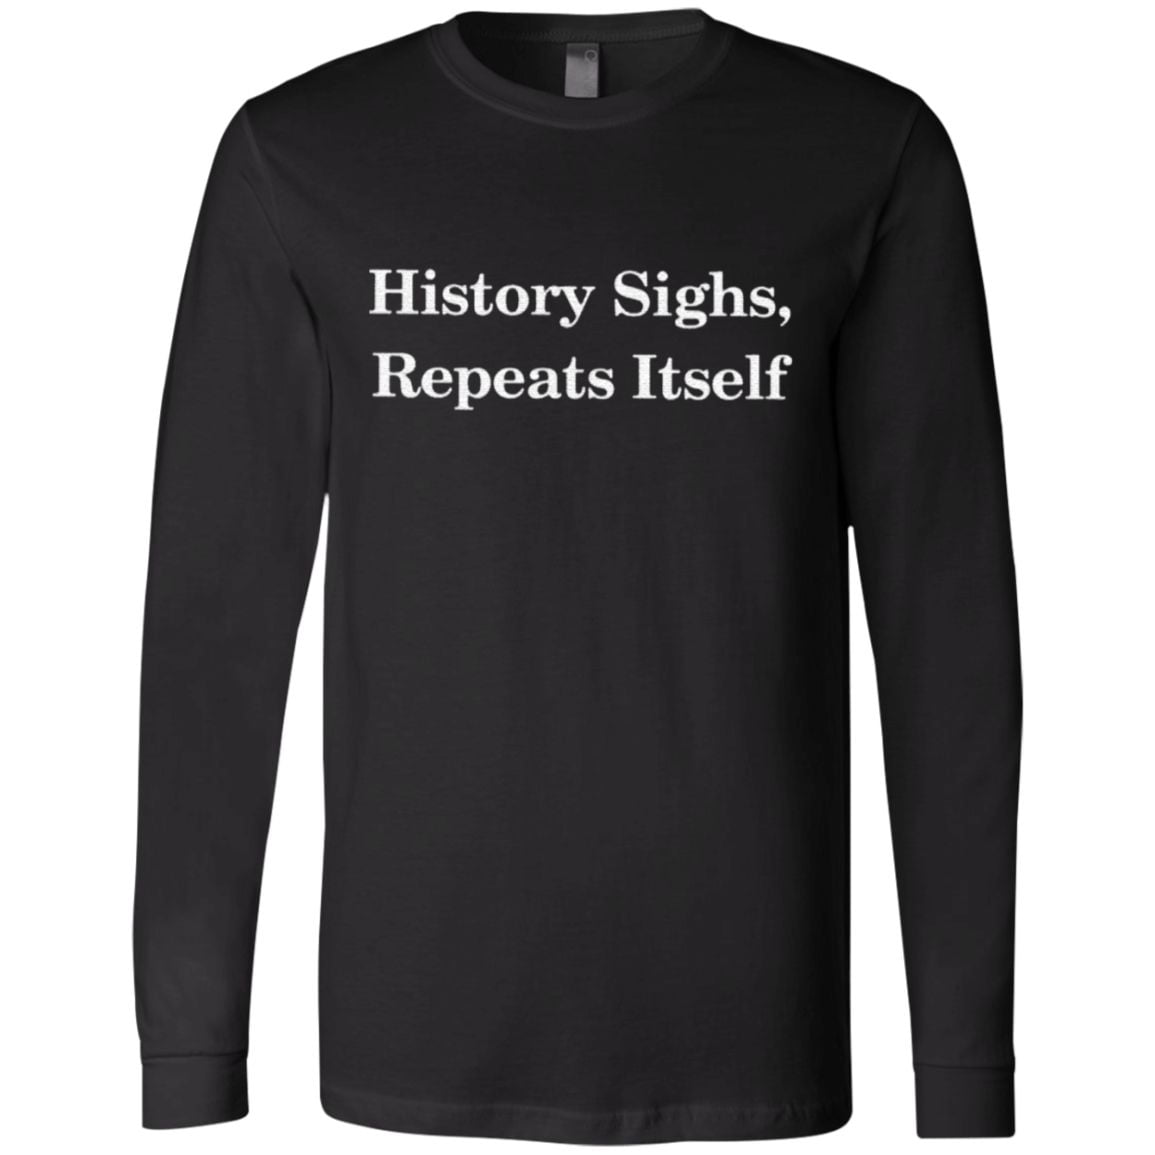 History Sighs Repeats Itself Shirt